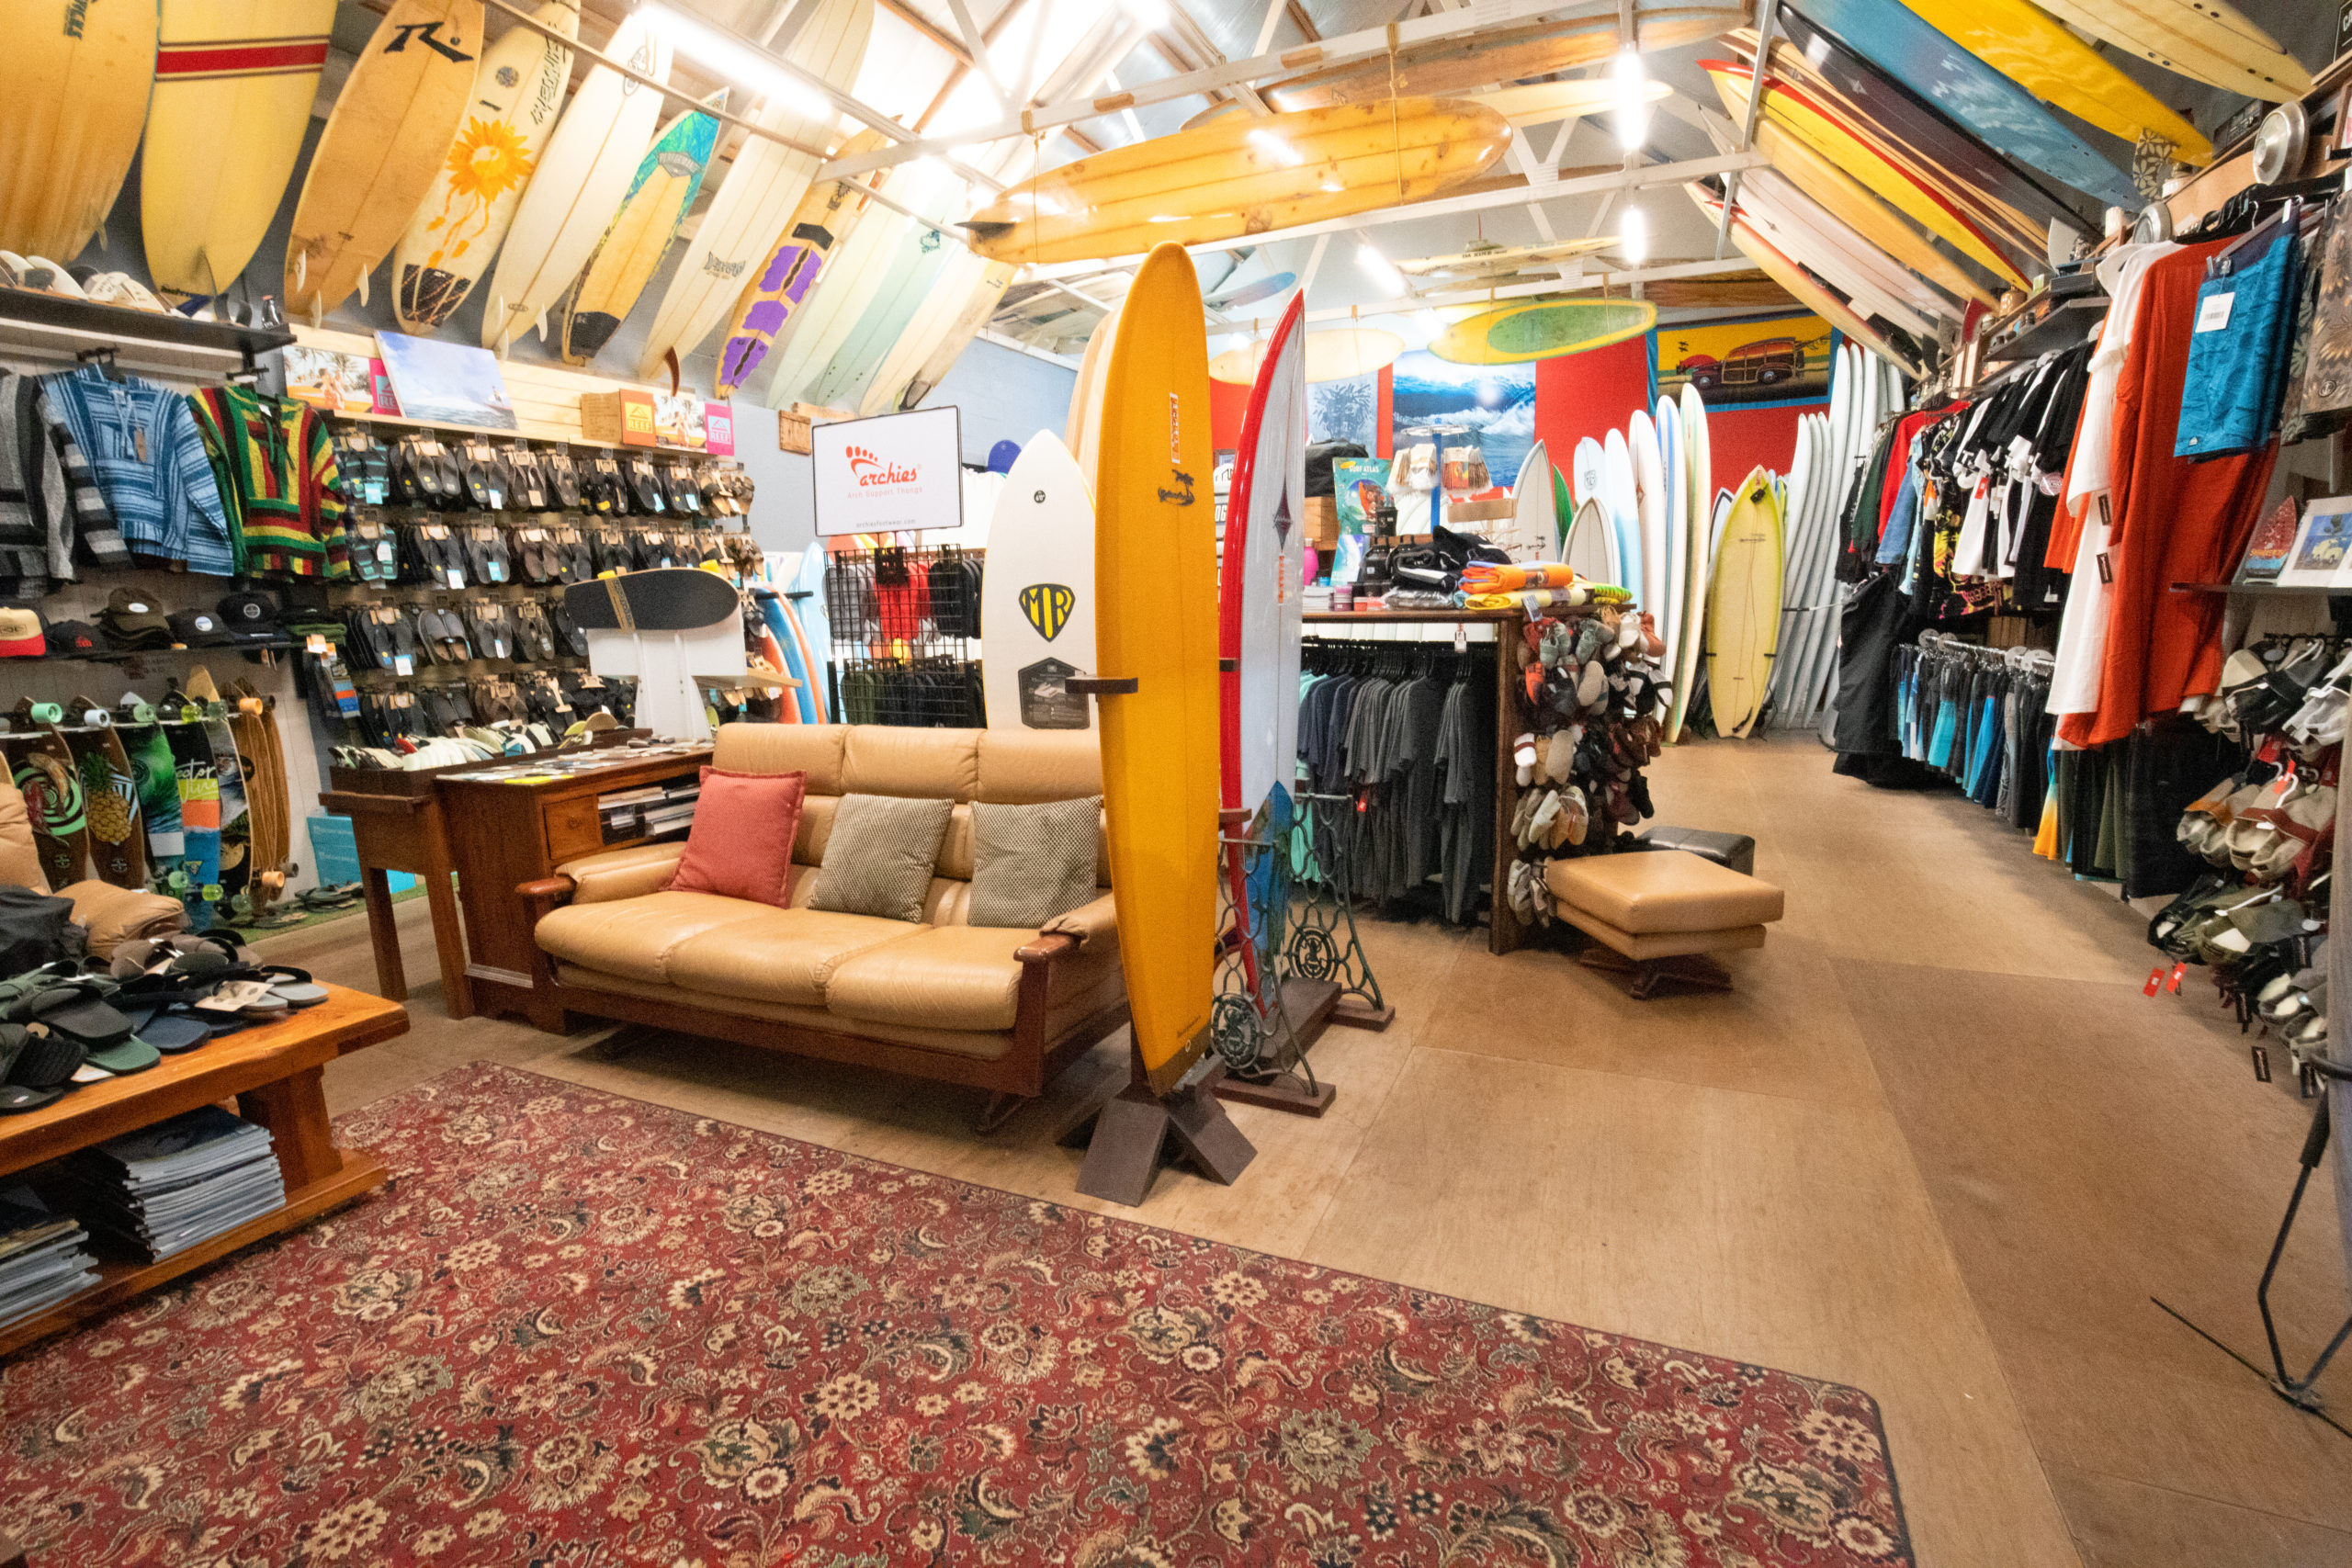 Inside Yahoo Surfboards, Dunsborough